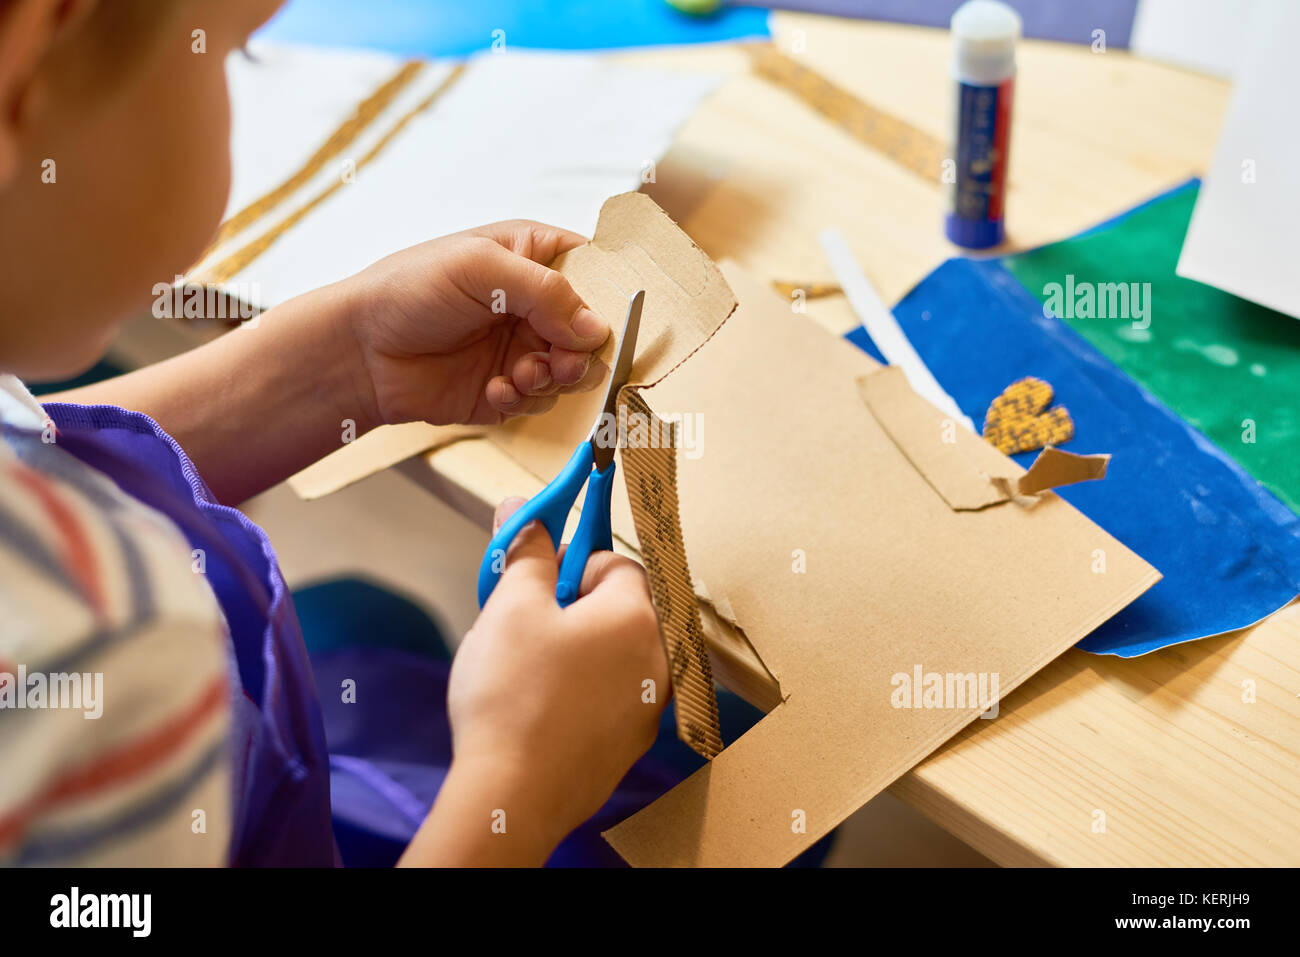 https://c8.alamy.com/comp/KERJH9/little-boy-cutting-paper-in-craft-class-KERJH9.jpg